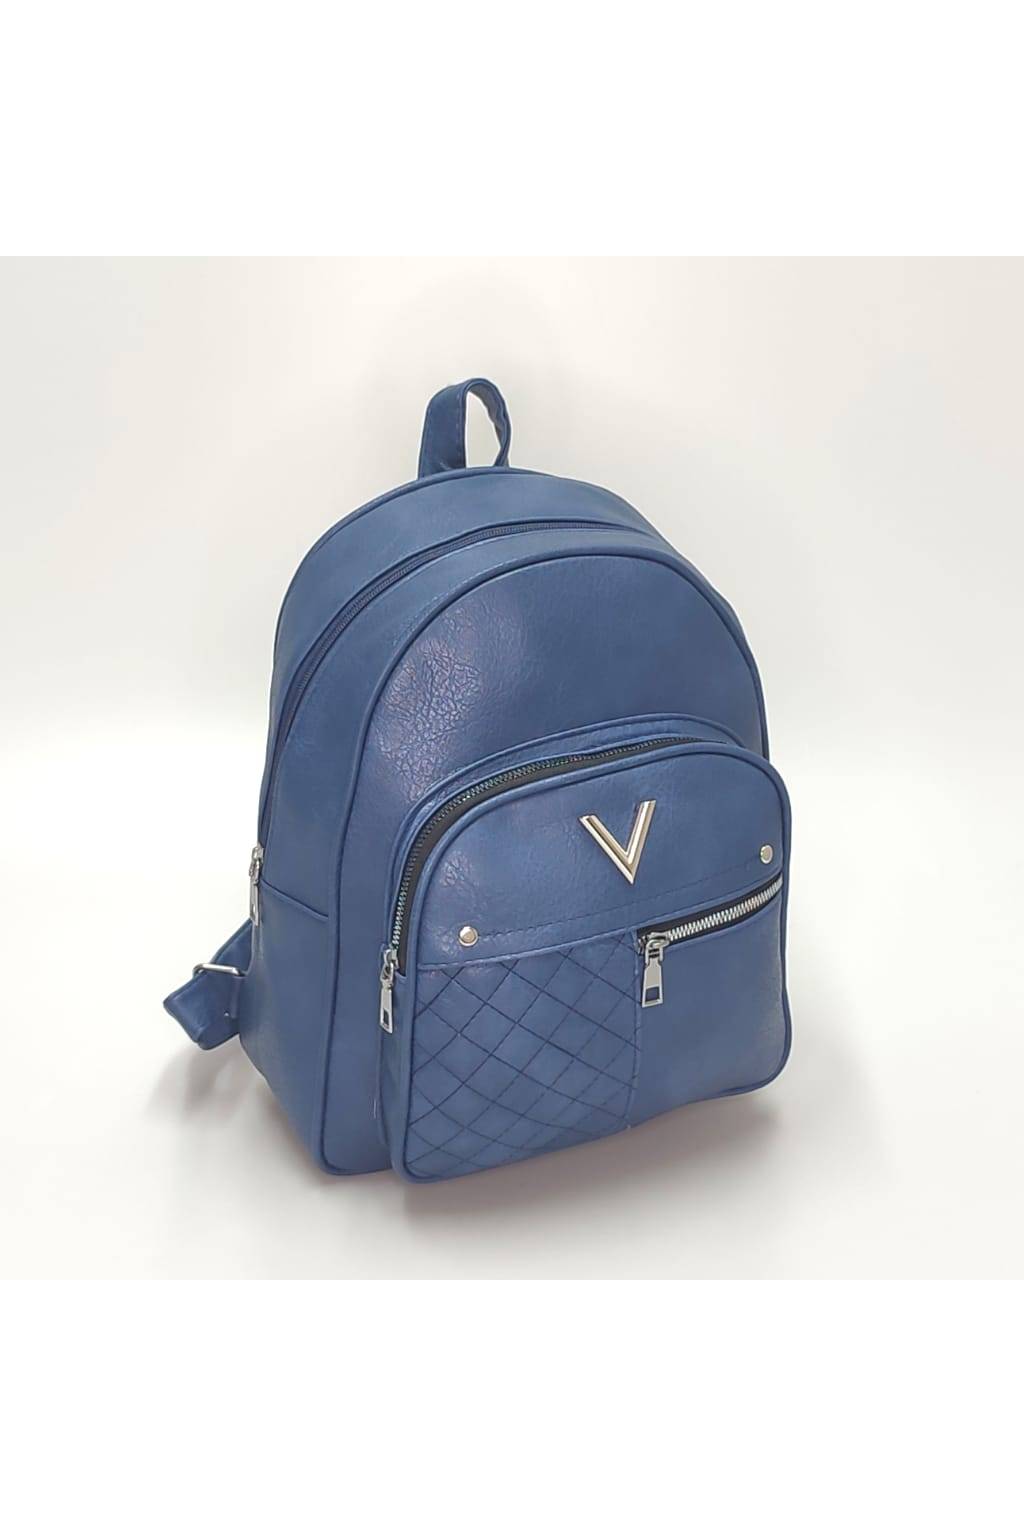 Dámsky ruksak 2481 modrý www.kabelky vypredaj (3)